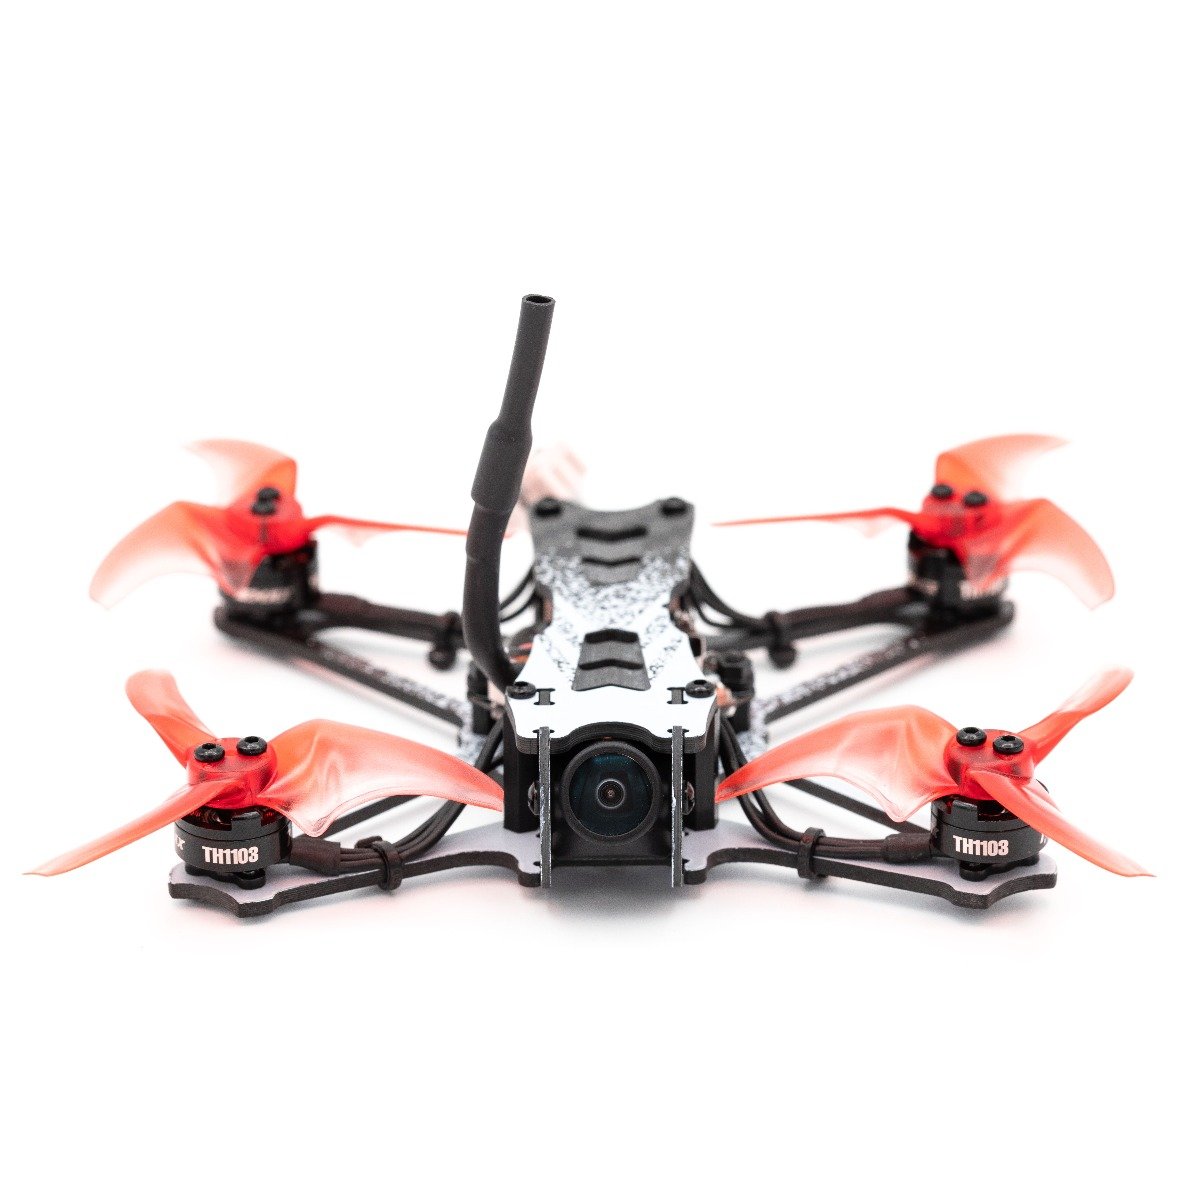 EMAX Tinyhawk II Freestyle RTF Kit - комплект: дрон з БК моторами, FPV очками, пультом, 2 батареями, с кейсом